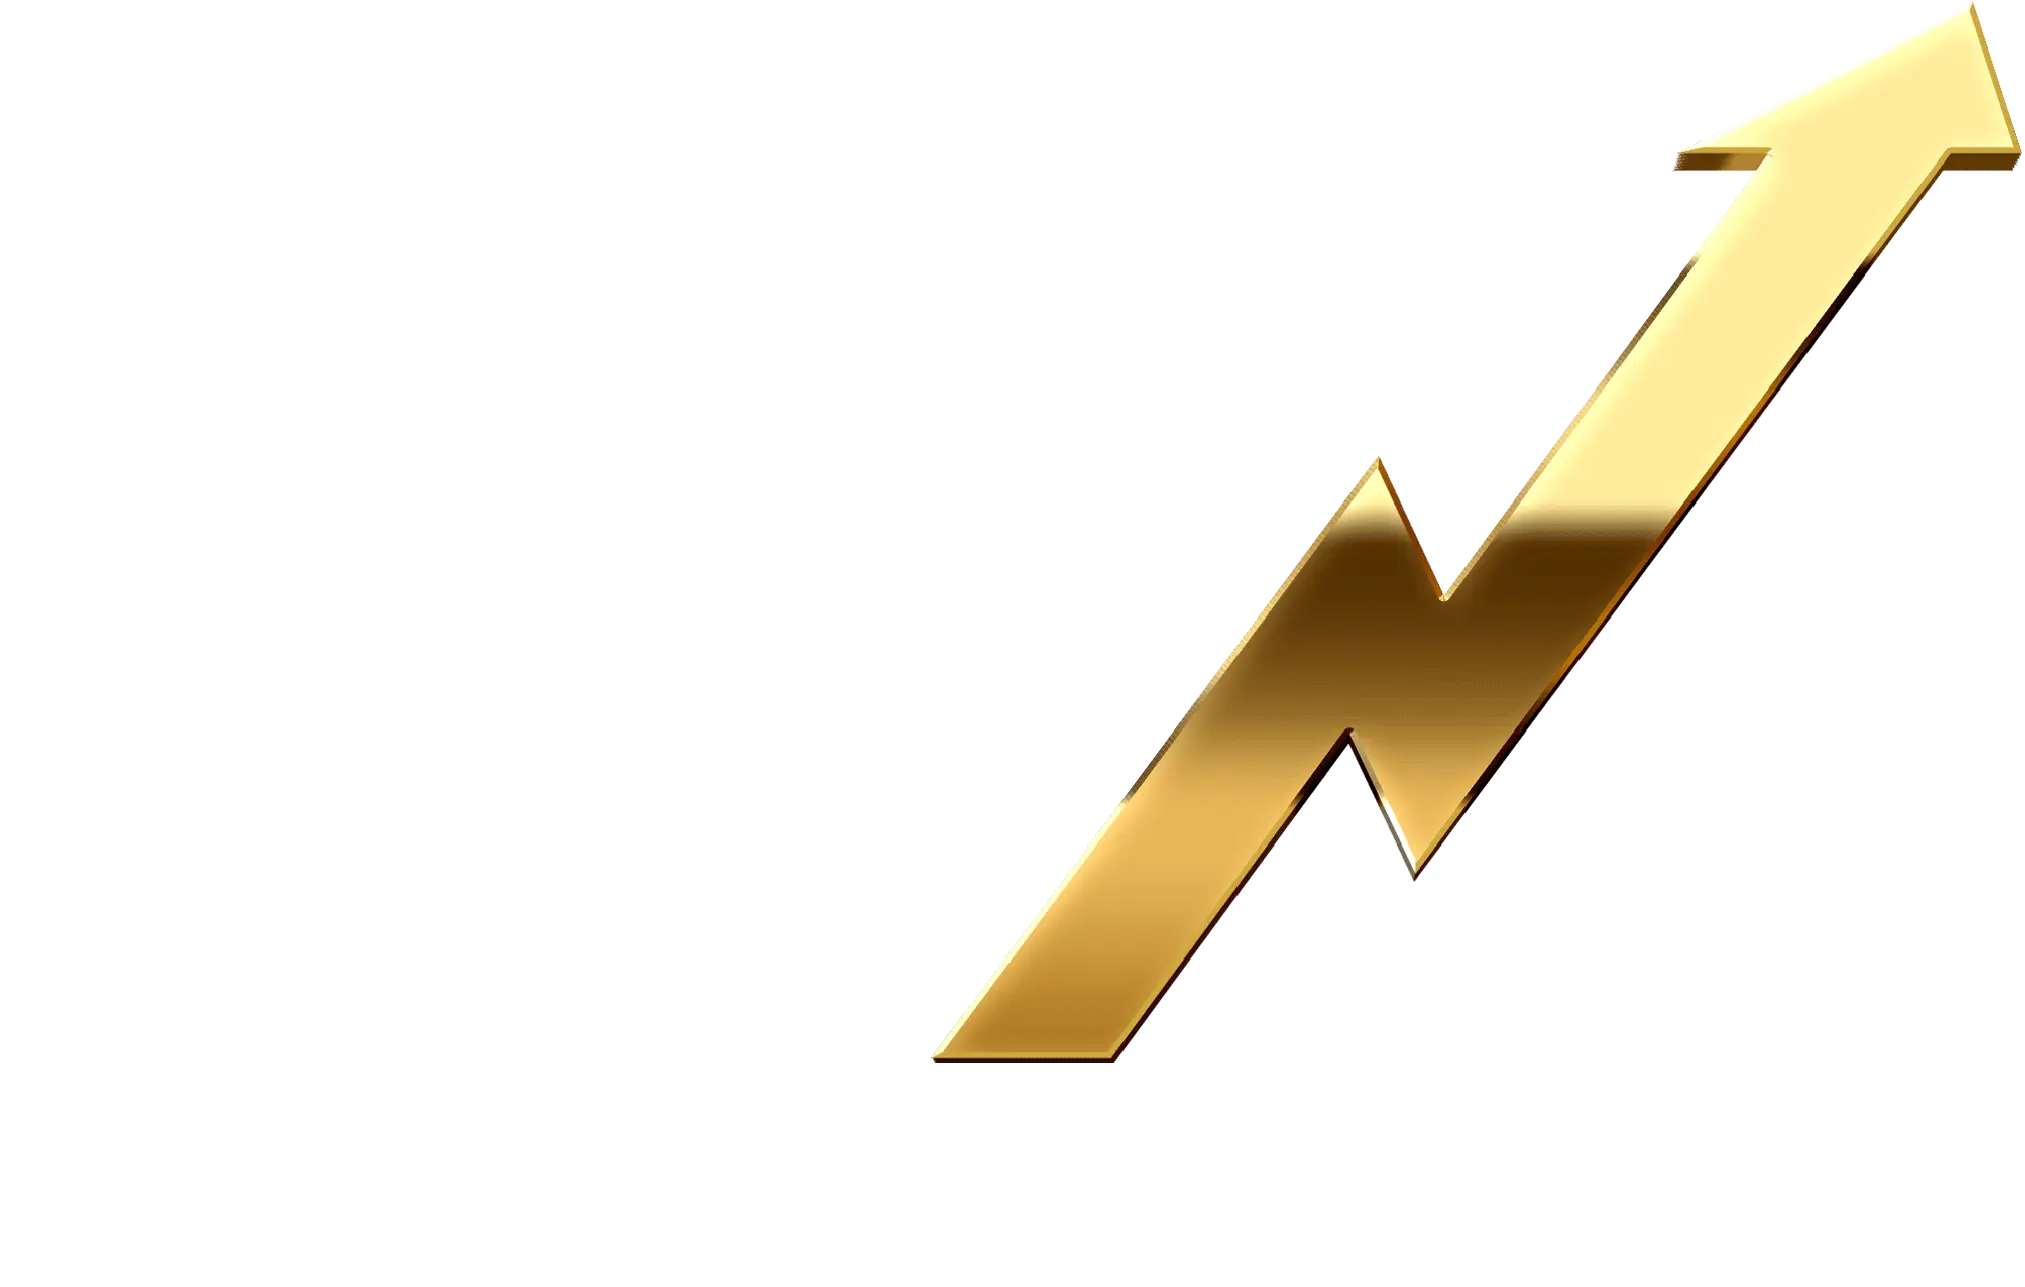 pcx logo